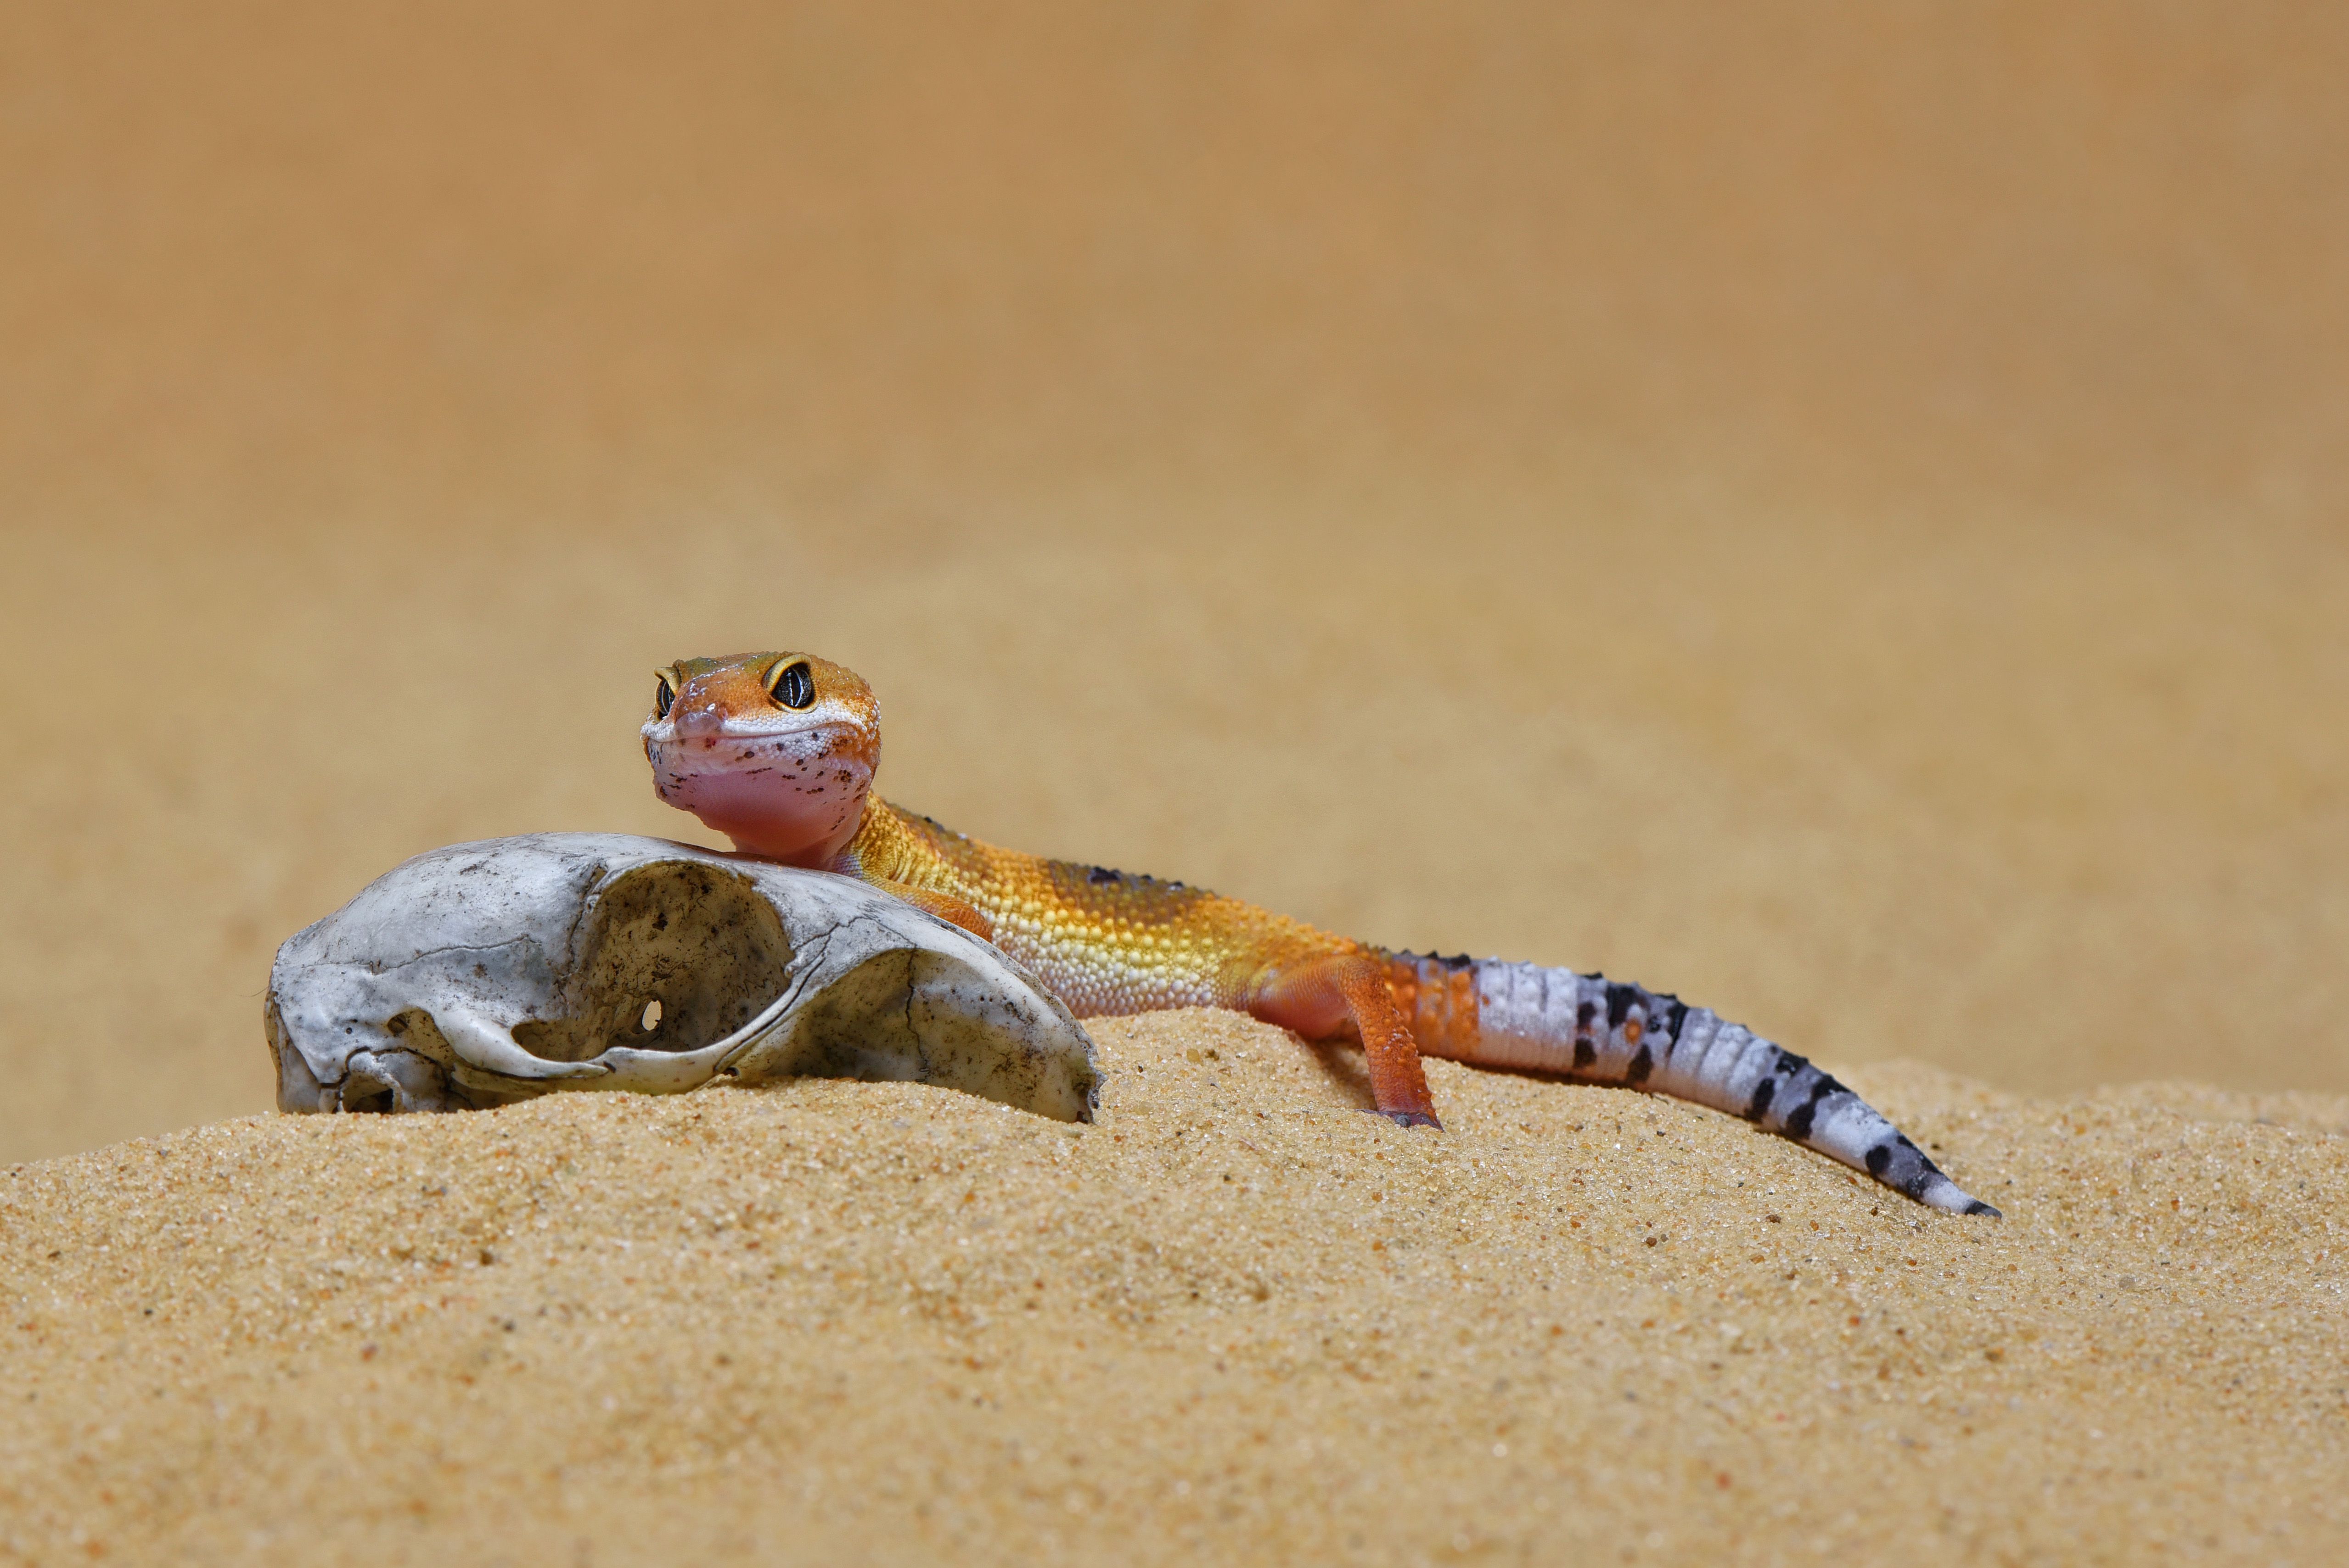 Leopard Gecko in sandy environment